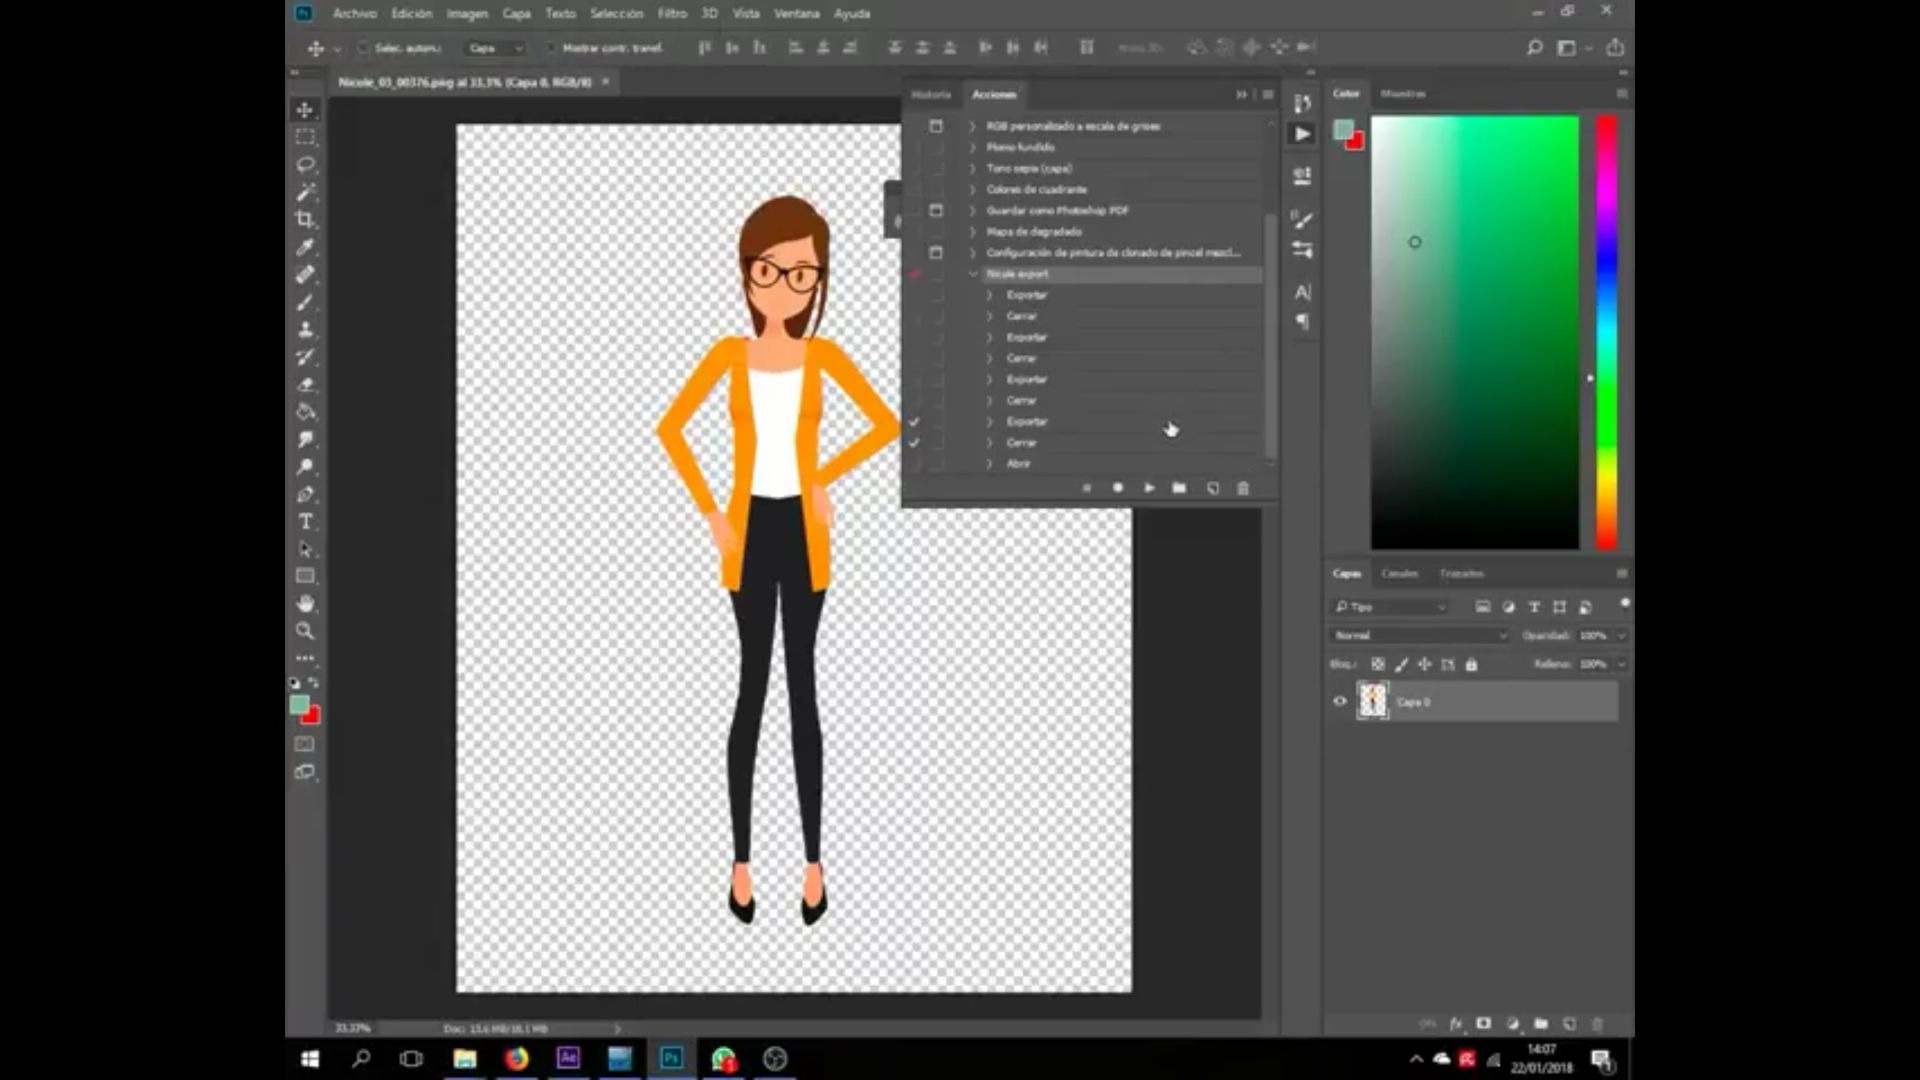 Aprende Batch Processing en Adobe Photoshop a través de este tutorial en video. ¡Compártelo!